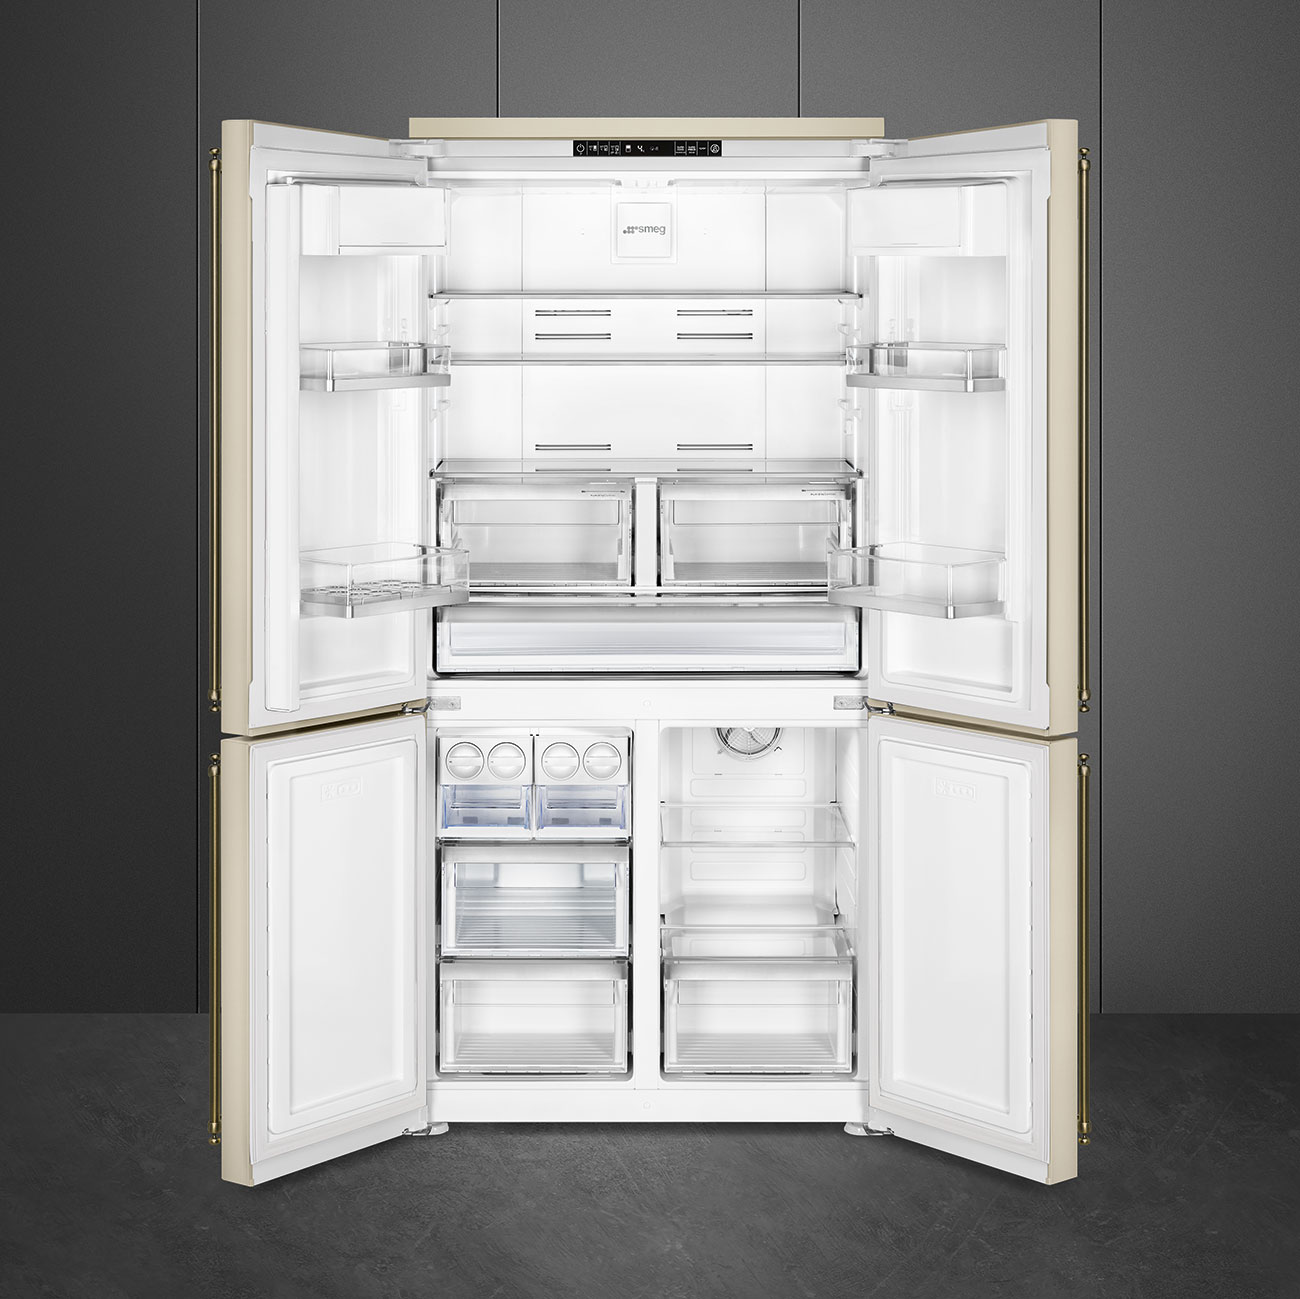 4 Doors Free standing refrigerator - Smeg_2